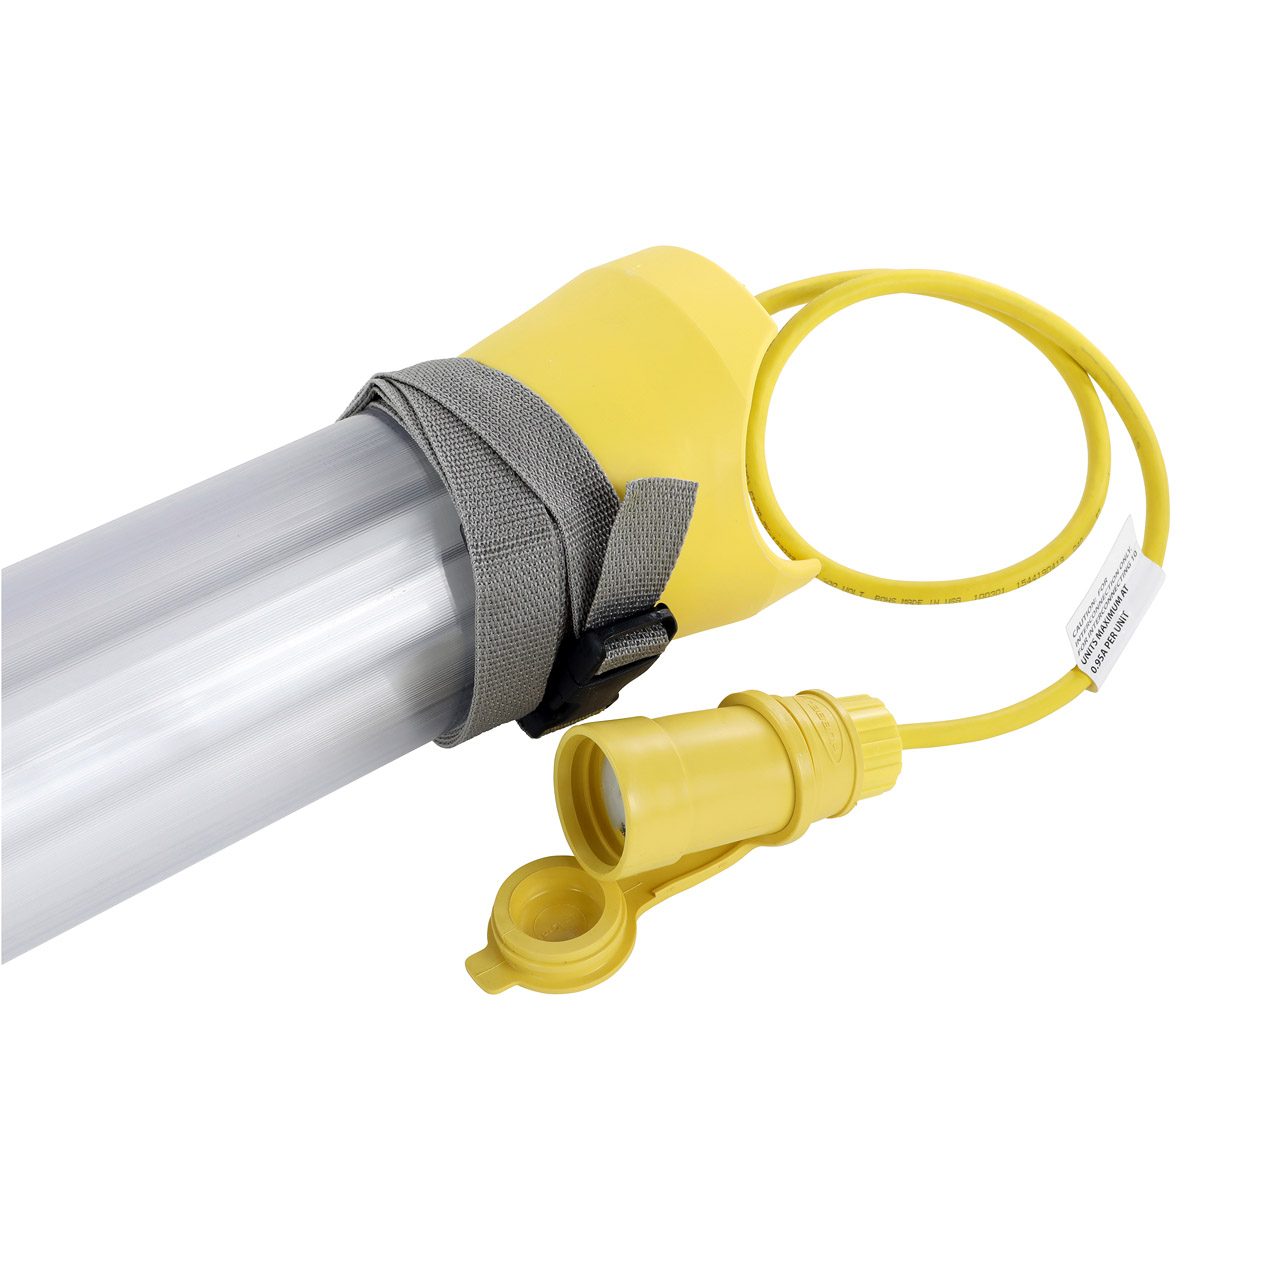 (3) T5 Lamp Fluorescent Portable Work Light Emergency Backup